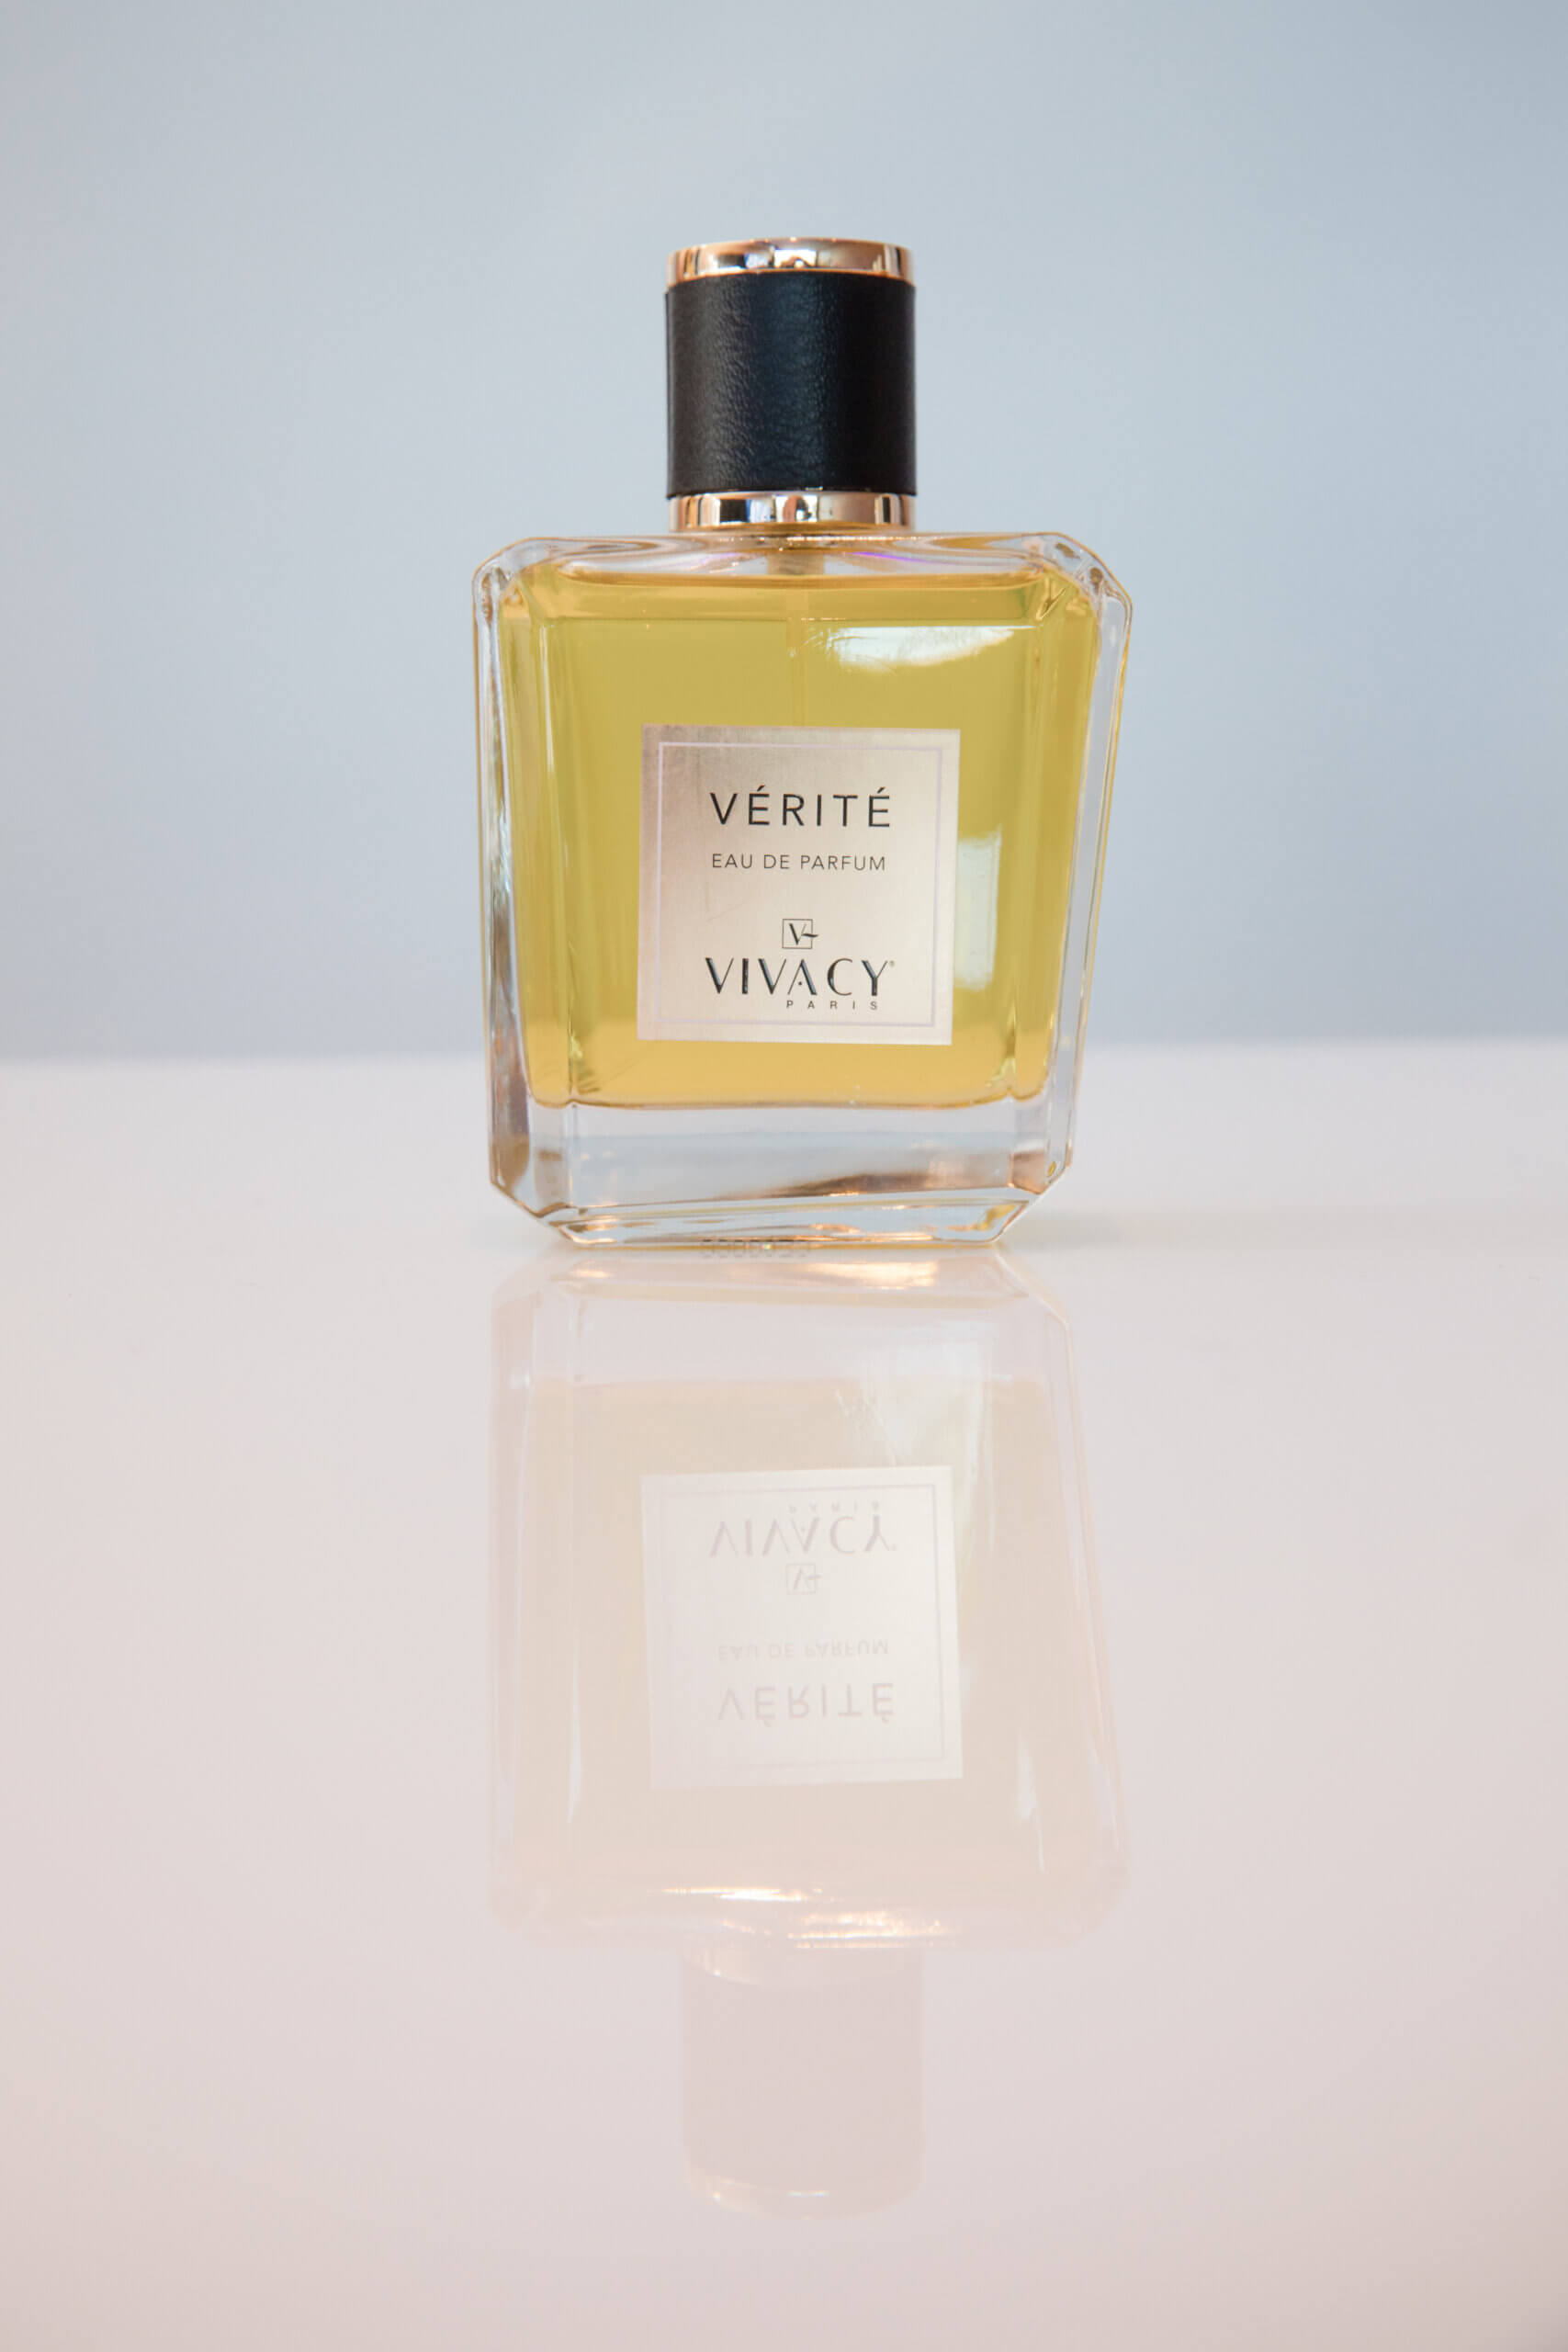 Vivacy perfume